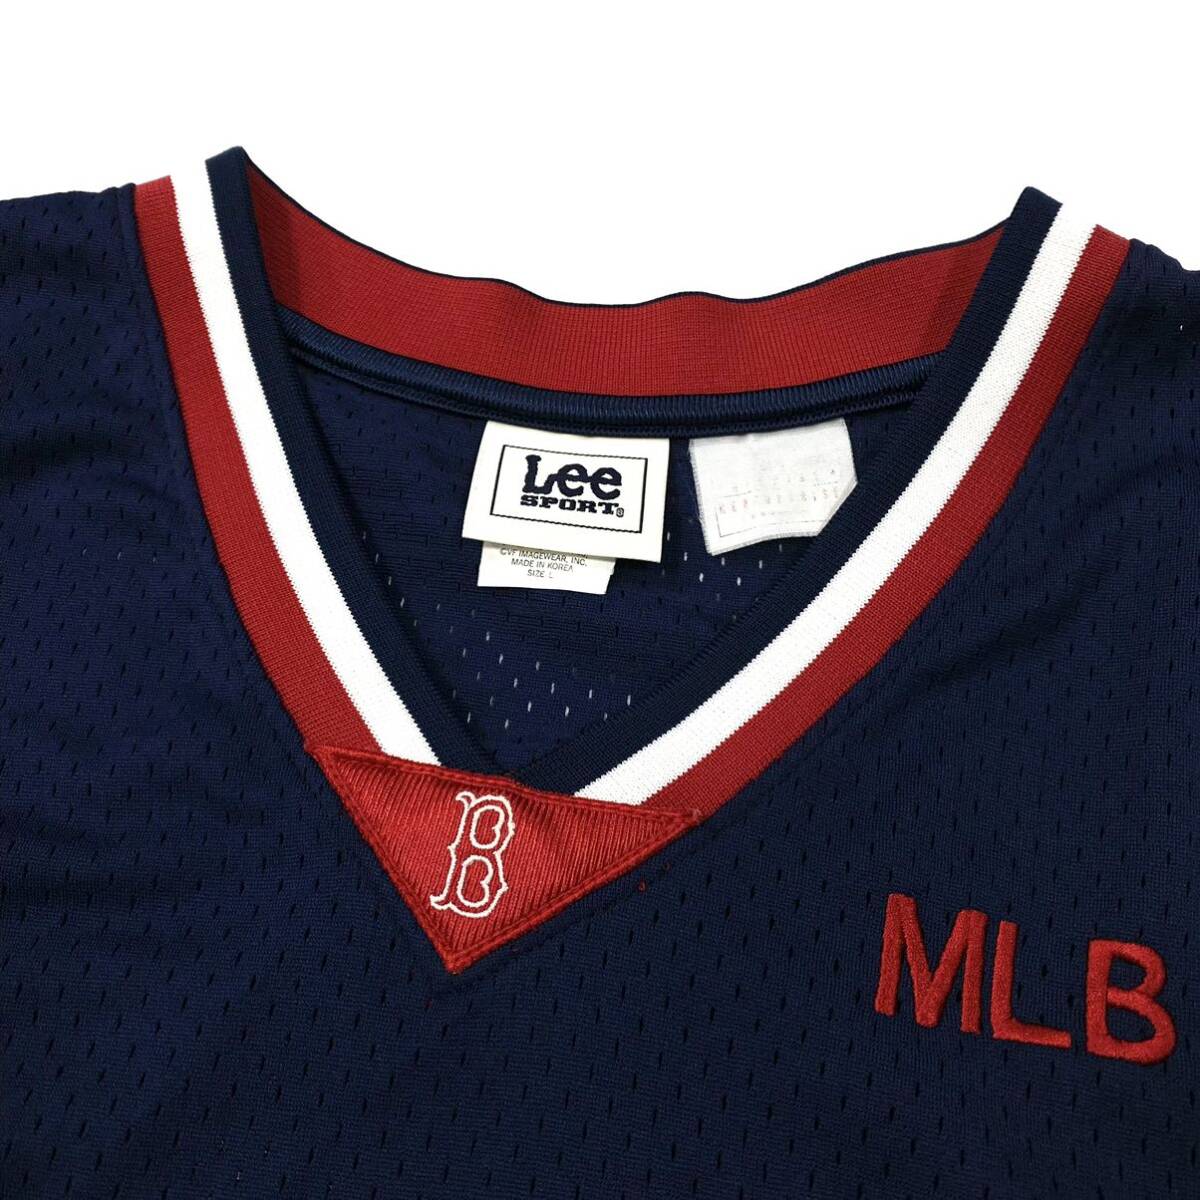 Lee(リー)メッシュタンクトップ MLB ボストン レッドソックス メンズL ネイビー系/レッド系の画像4